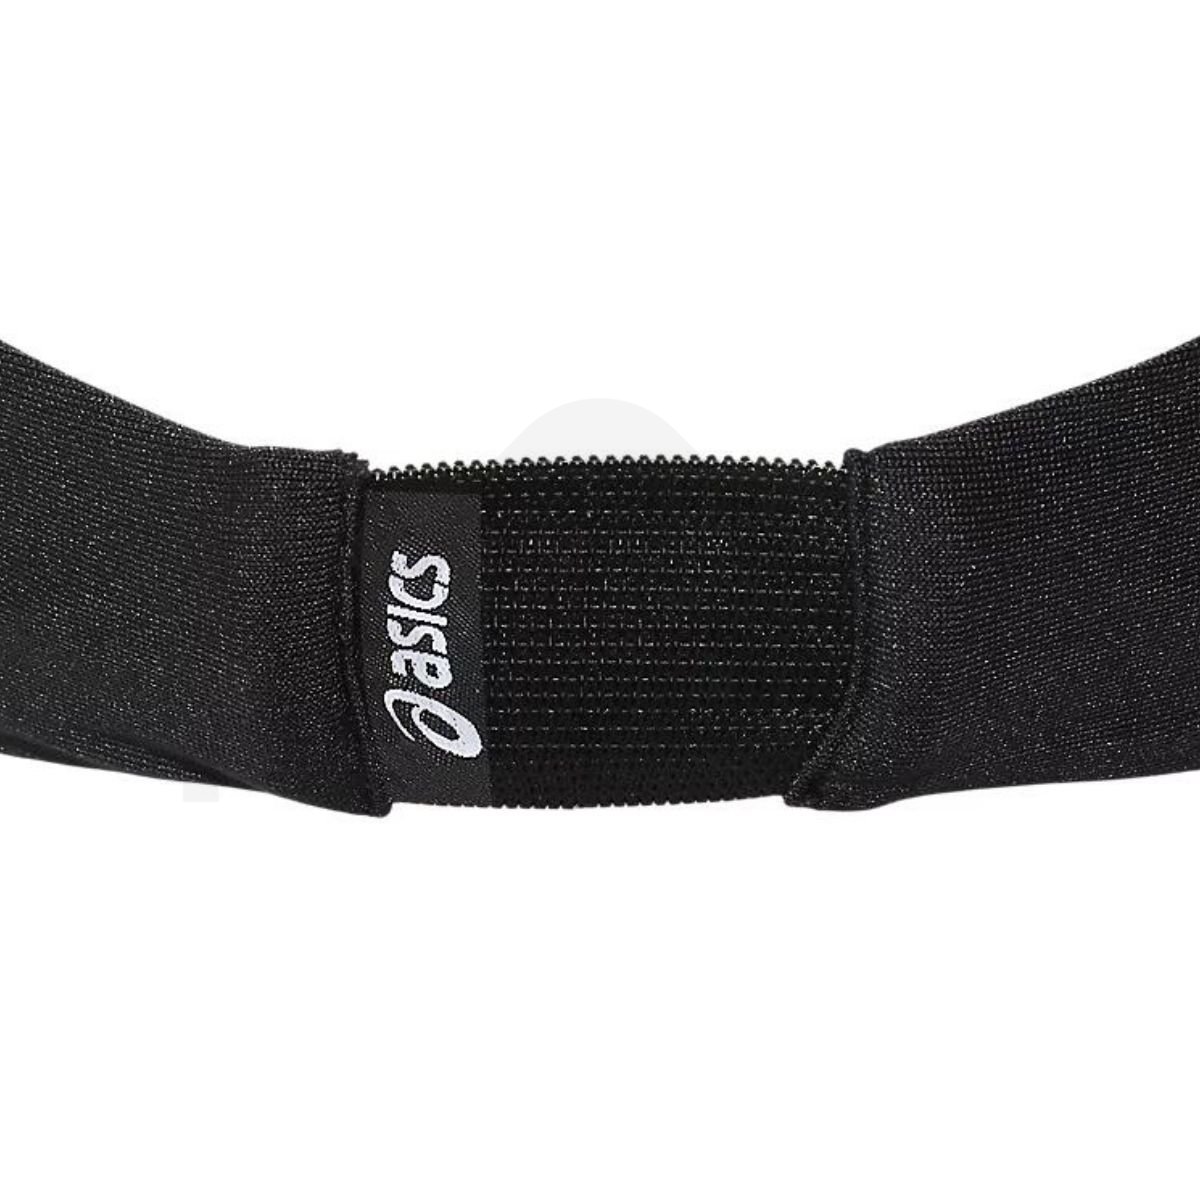 Čelenka Asics Fujitrail Headband - černá